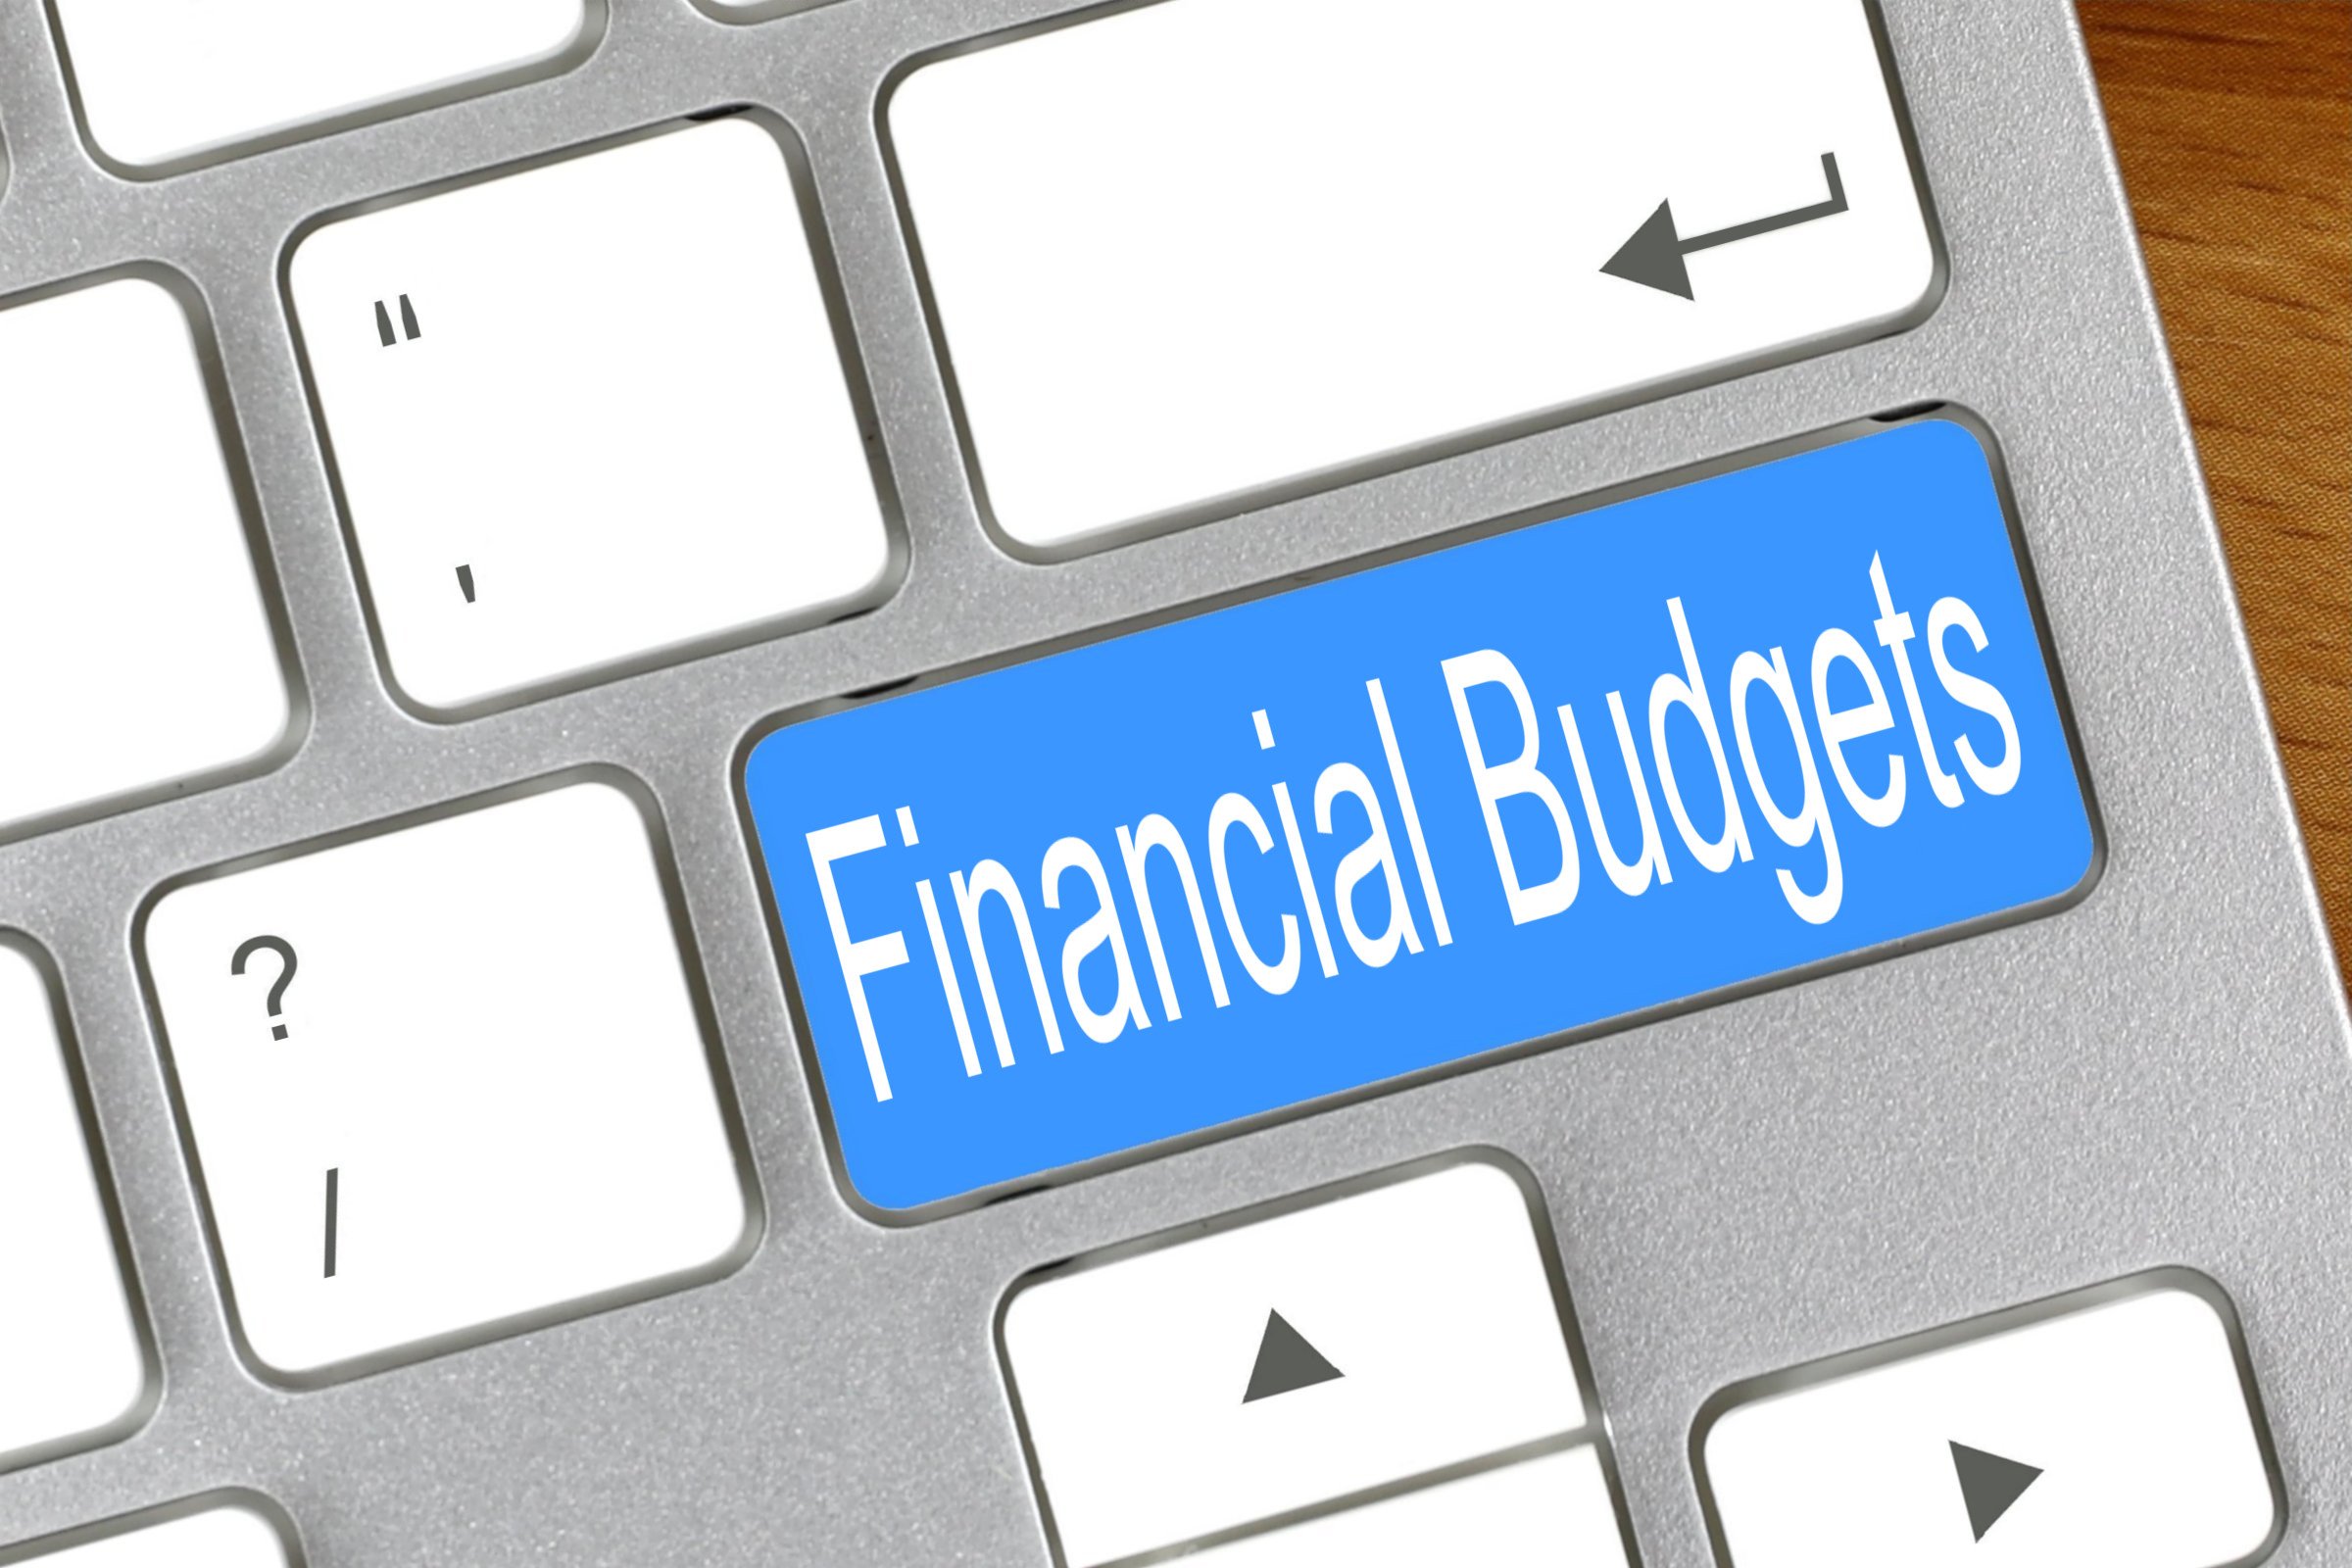 financial budgets